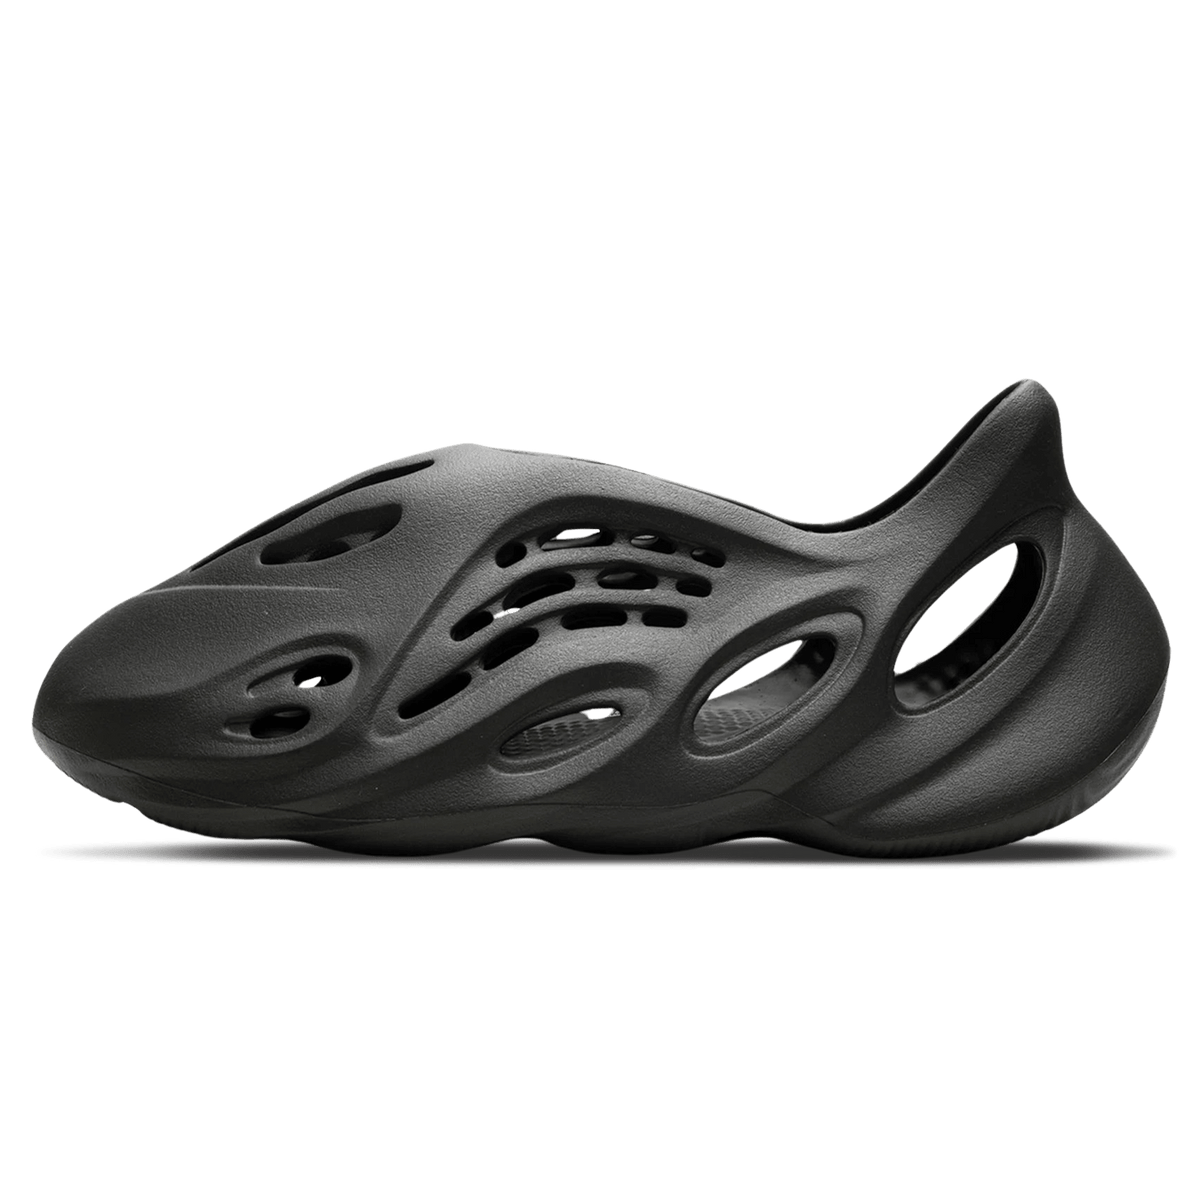 adidas bike Yeezy Foam Runner 'Carbon' - JuzsportsShops